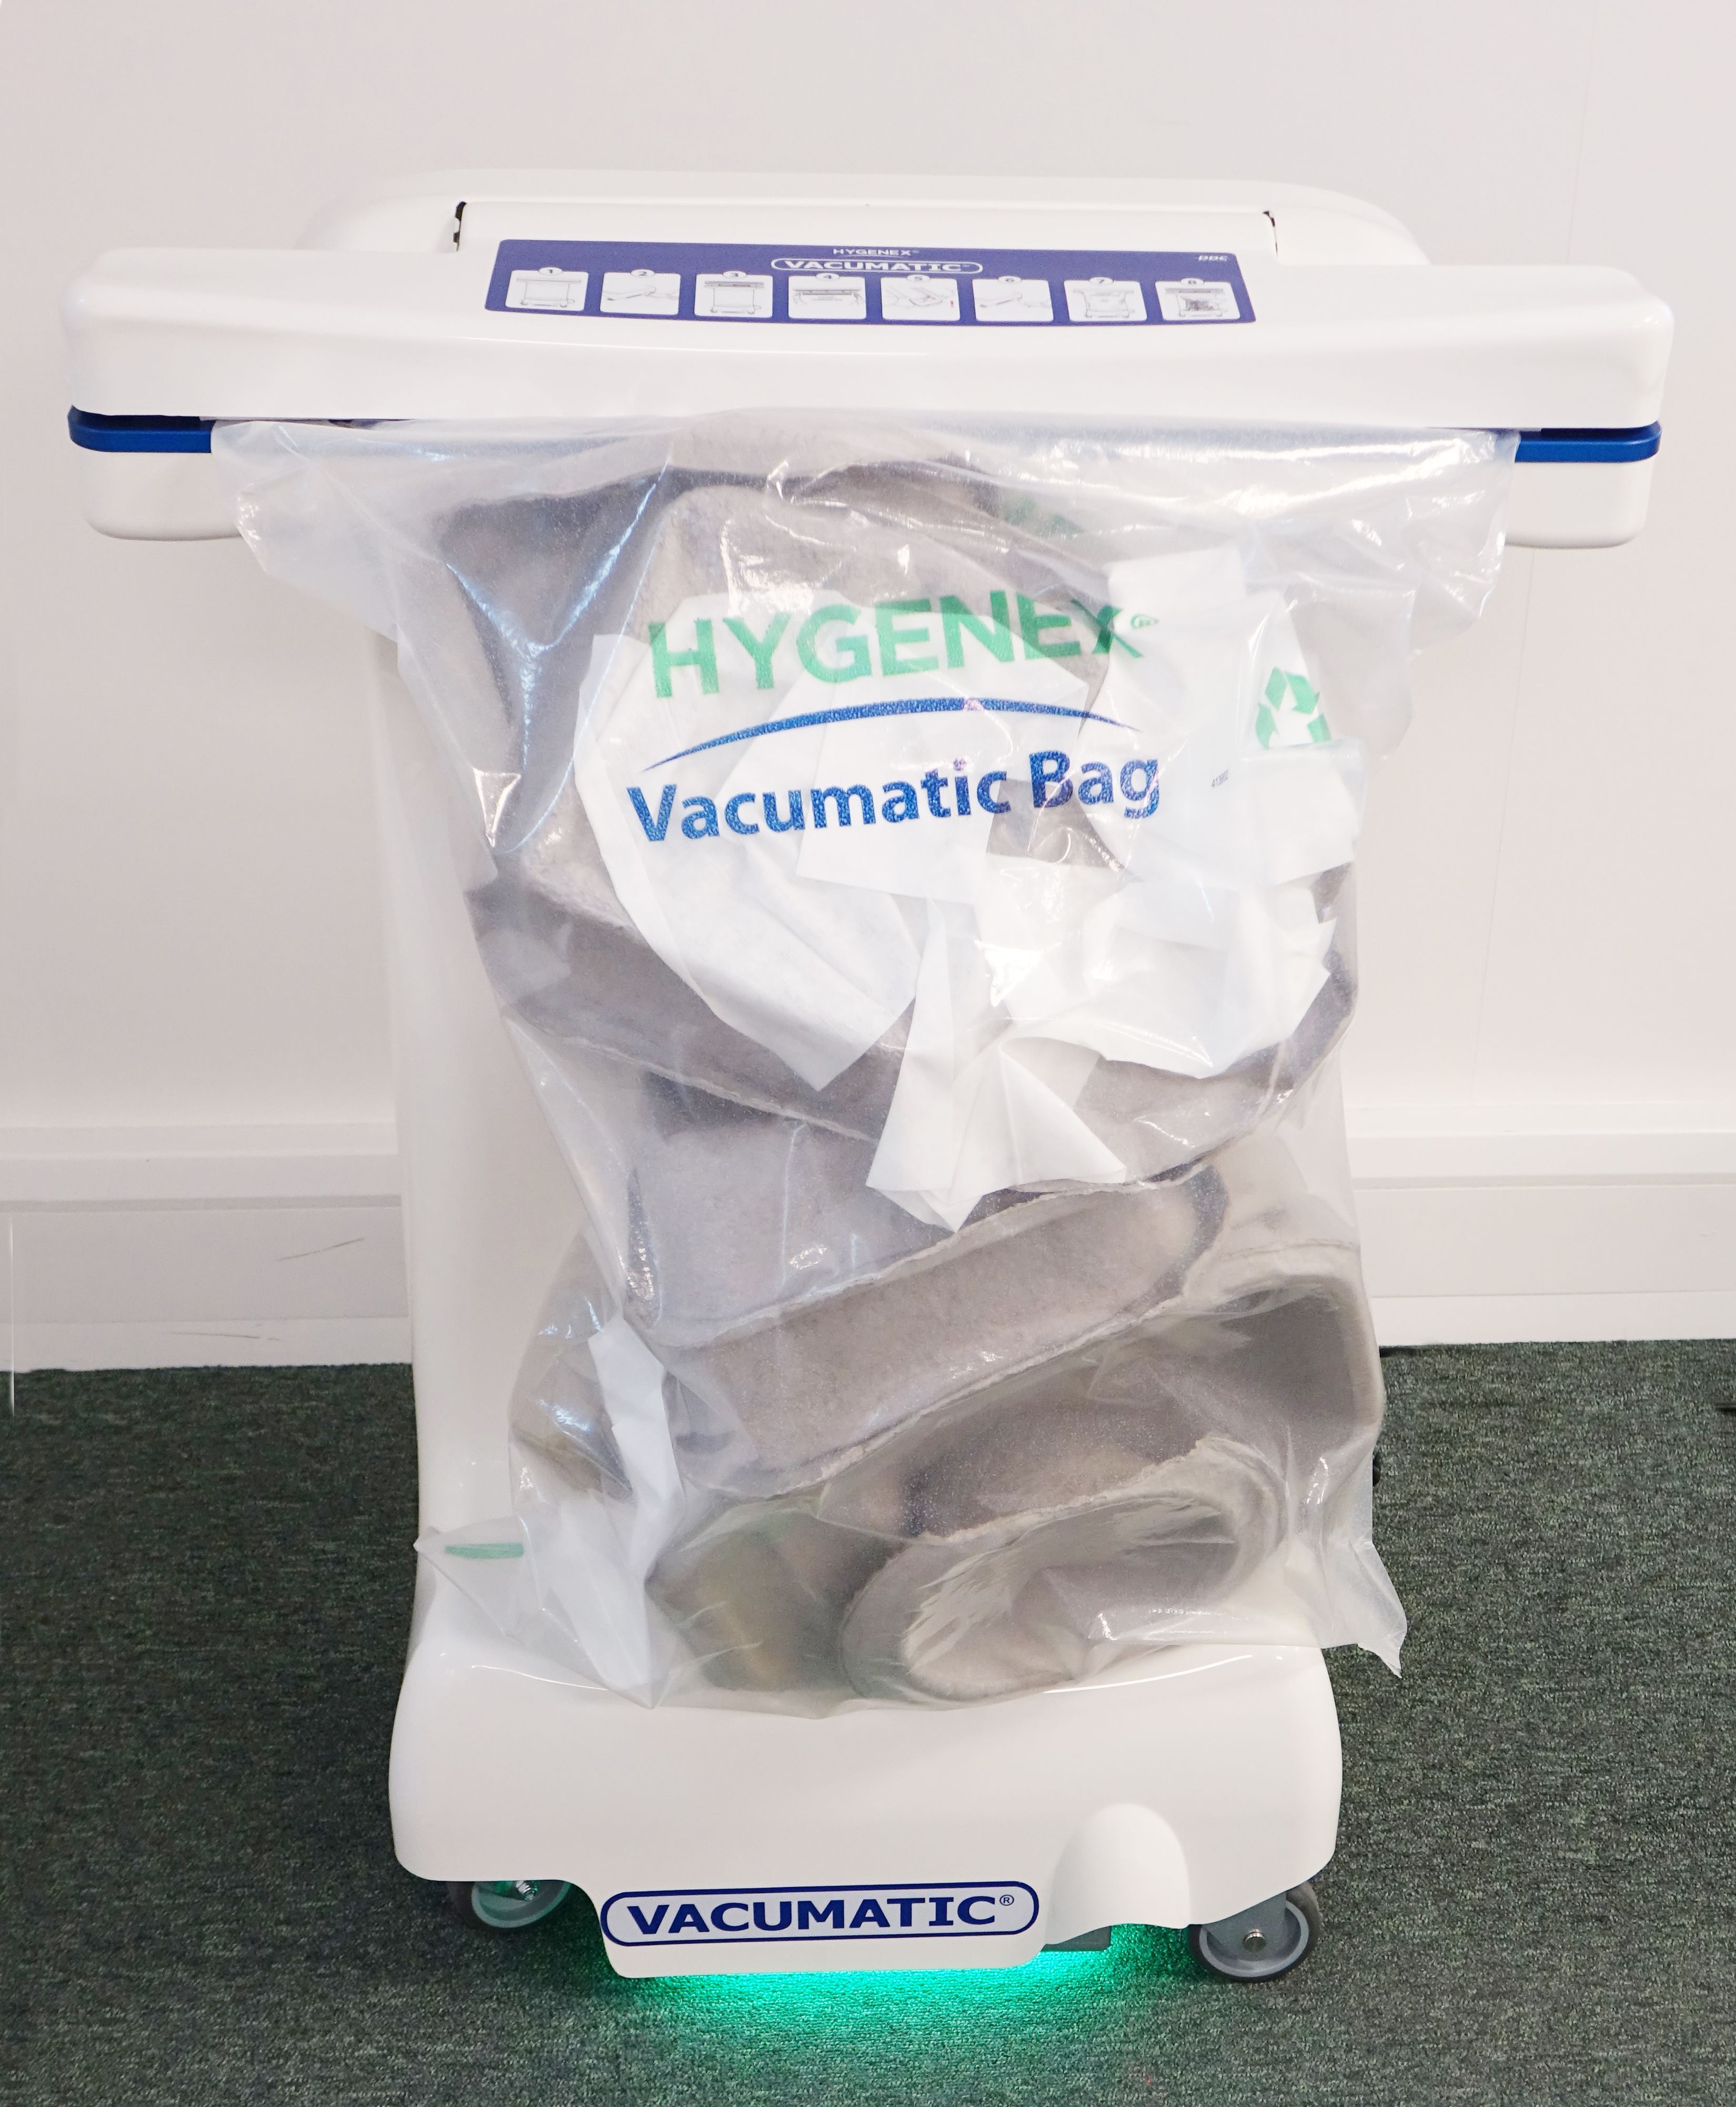 Vacumatic waste disposal system